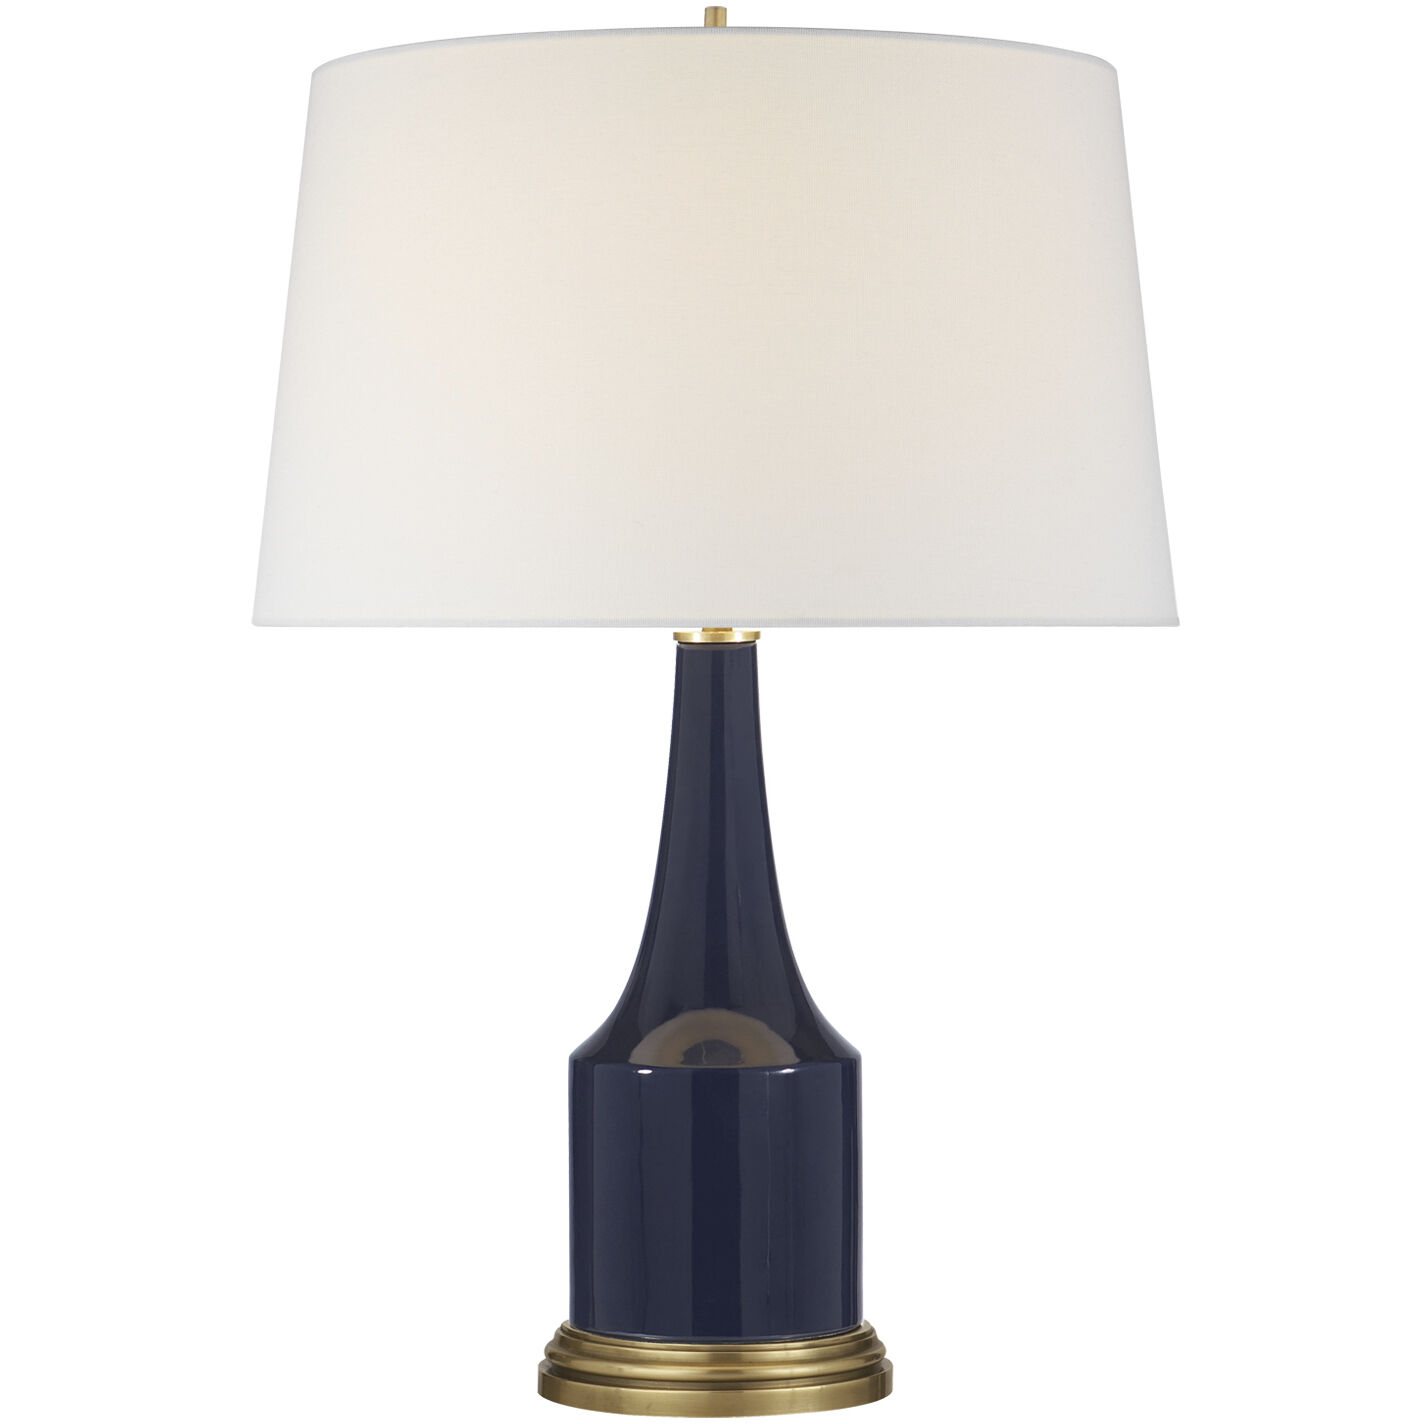 Alexa Hampton Sawyer Table Lamp